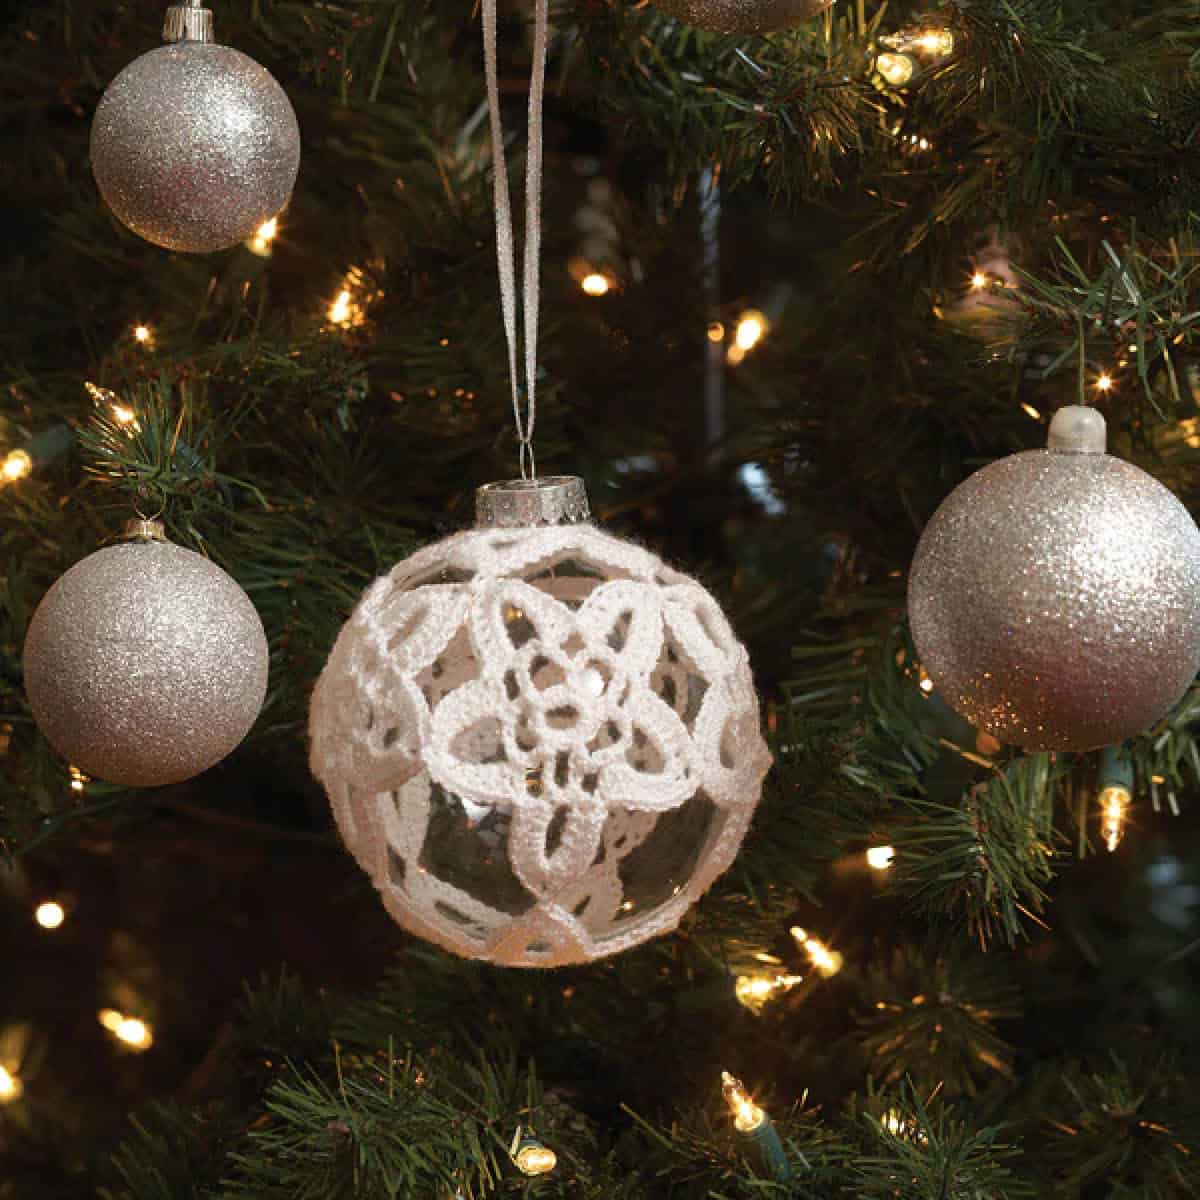 Crochet Ornament Balls for Decorations for Christmas